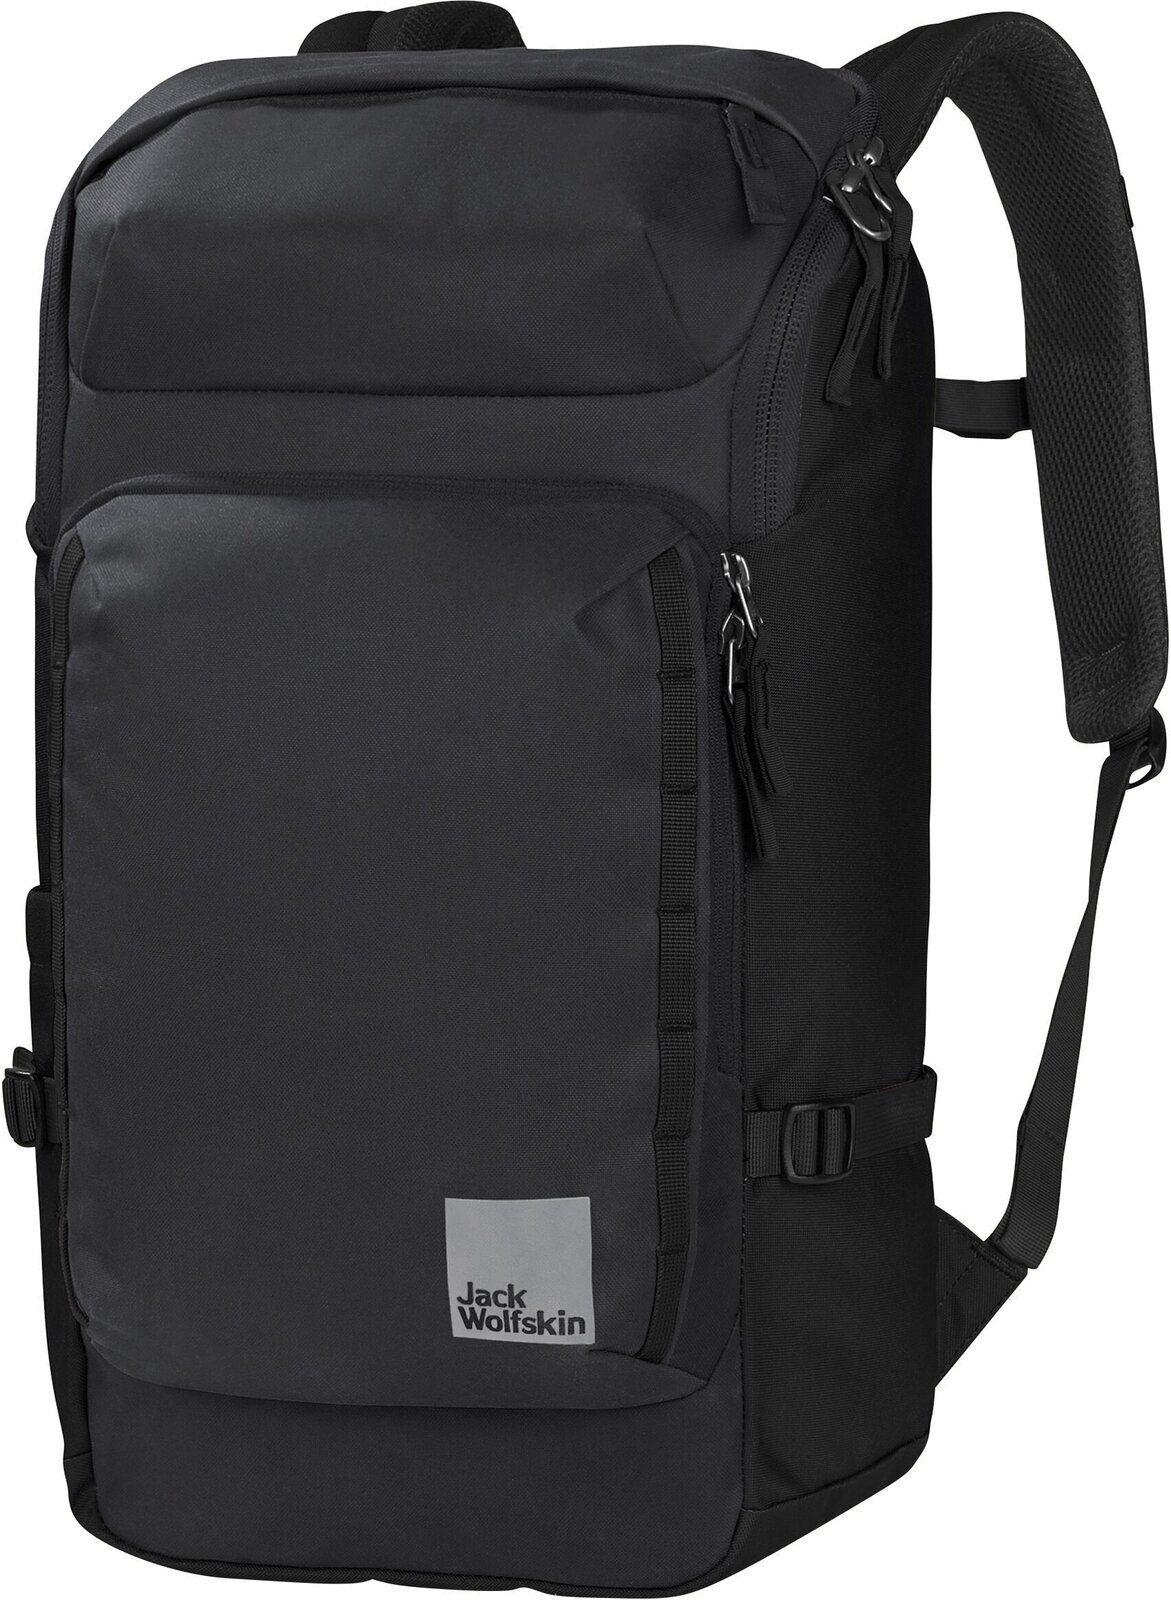 Lifestyle Backpack / Bag Jack Wolfskin Dachsberg Black Backpack